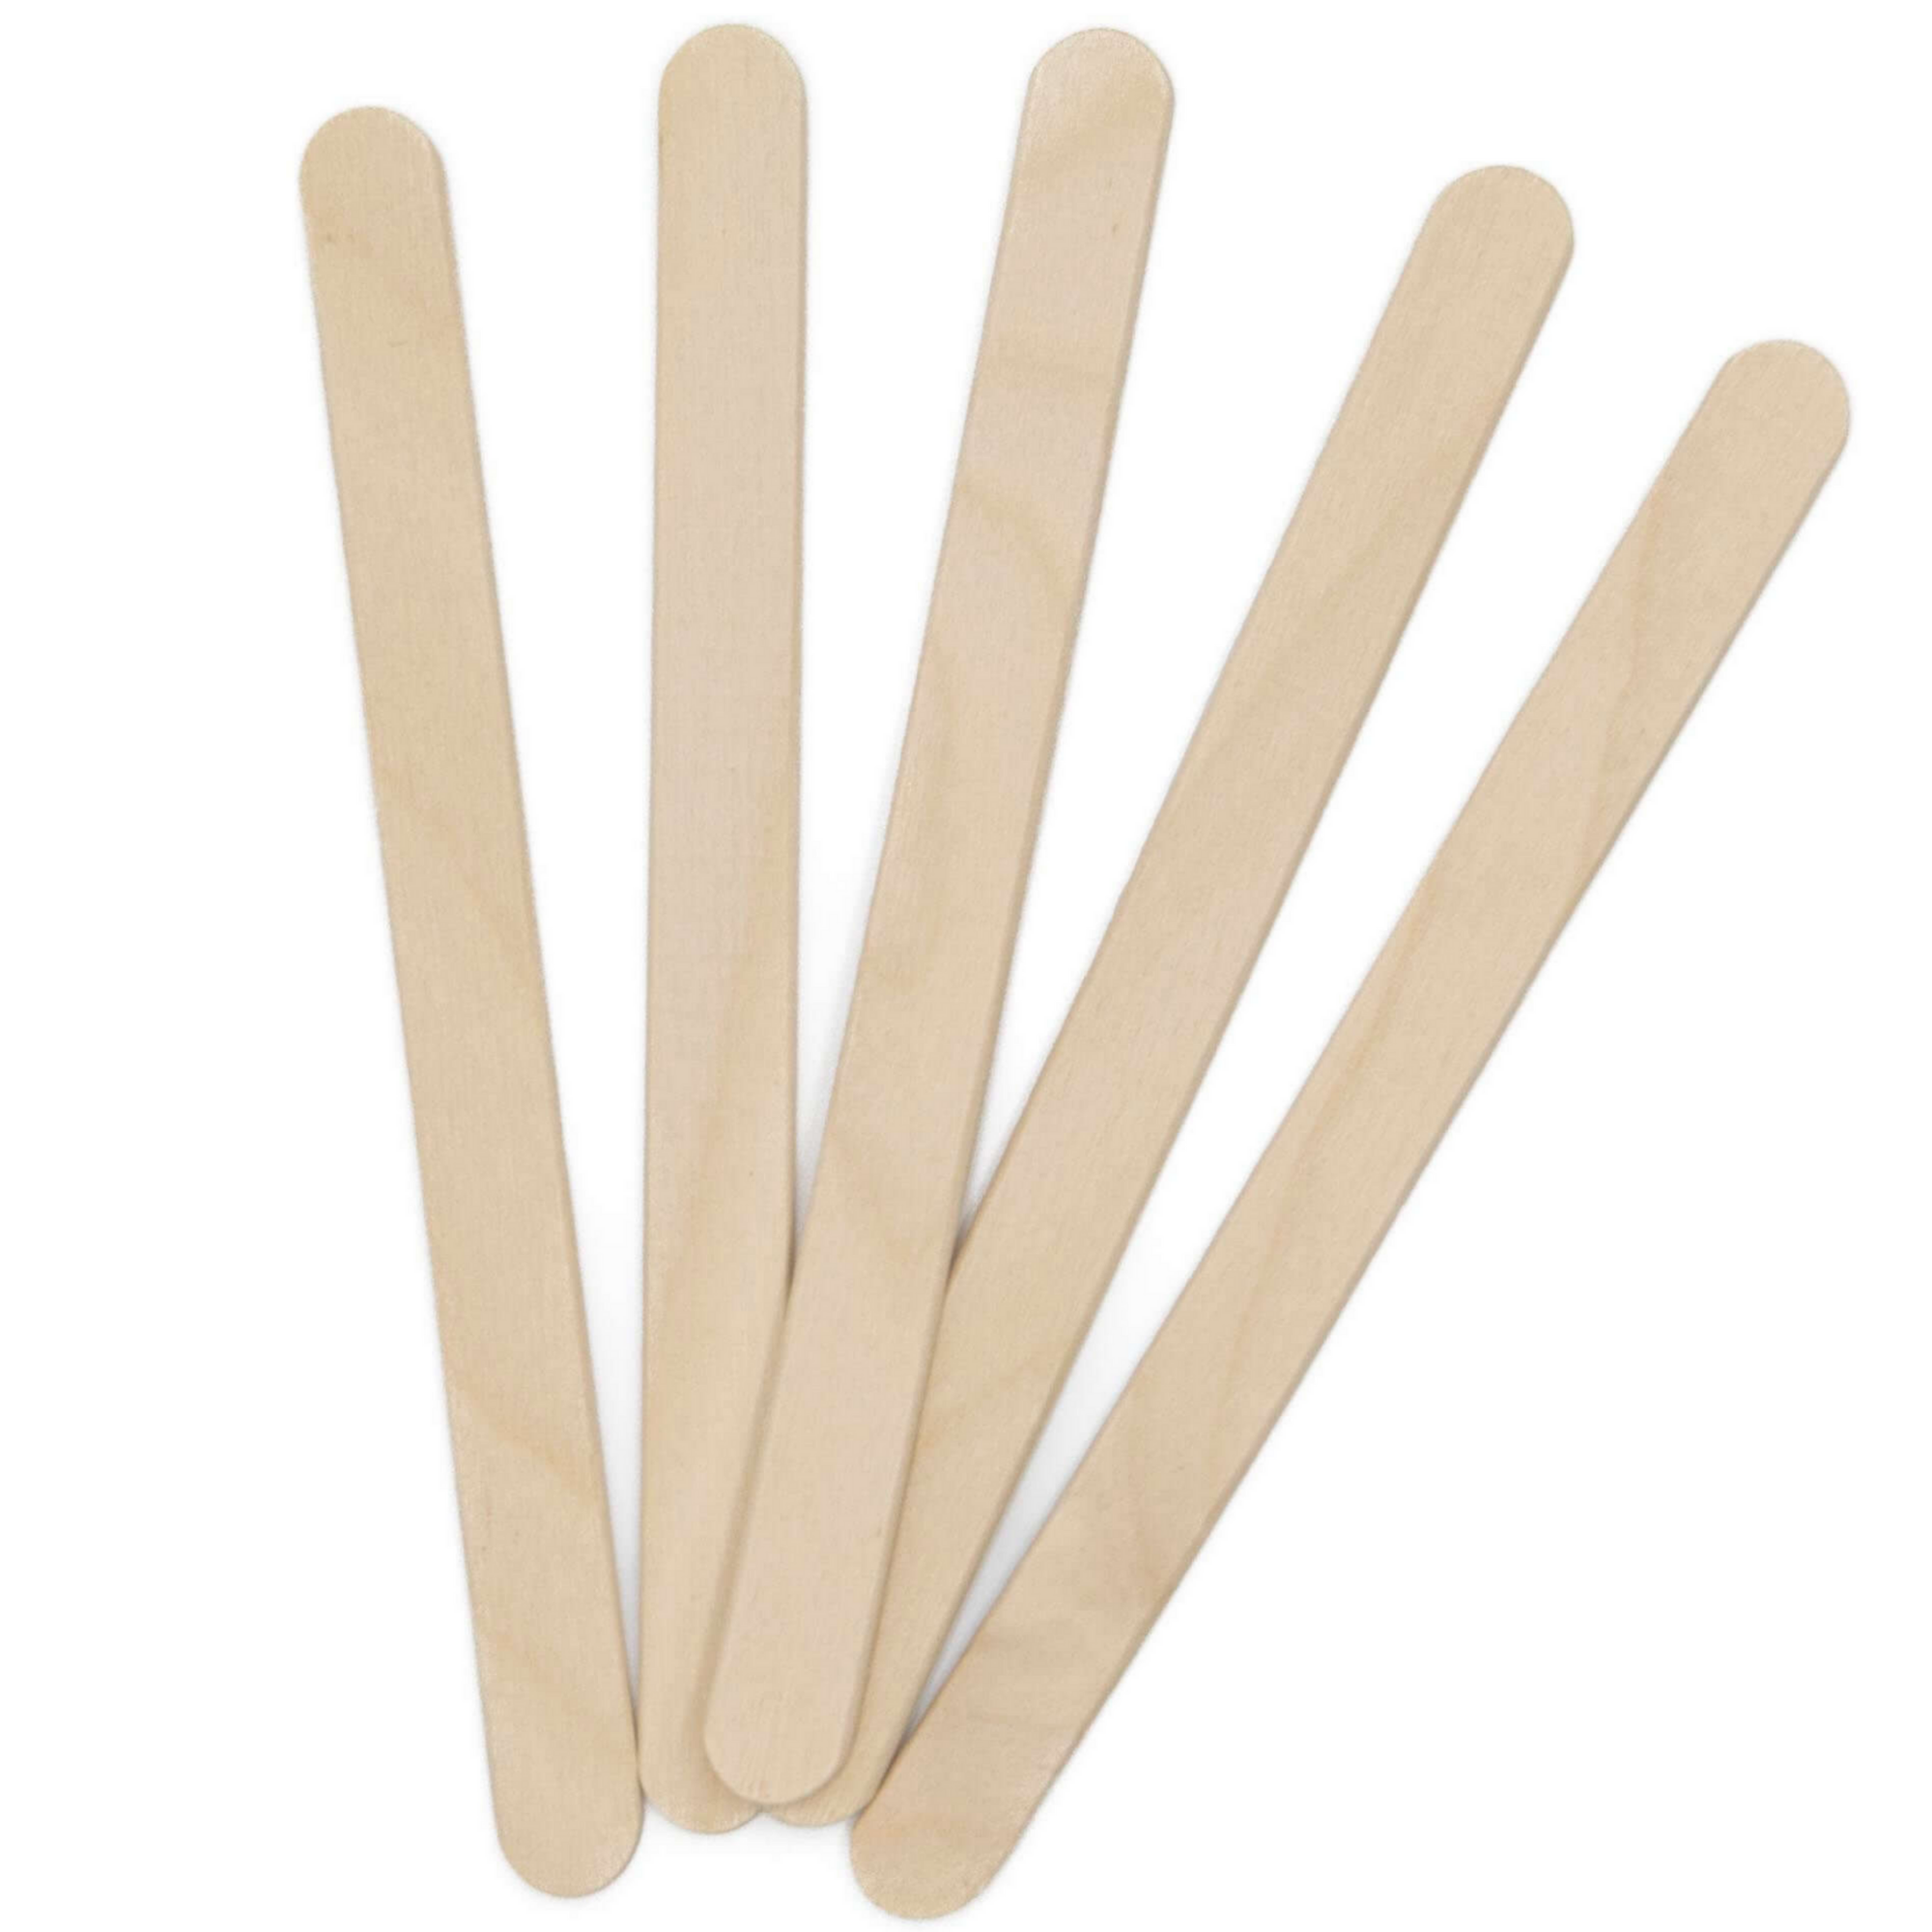 Large Waxing Sticks, Wax Sticks Spatula Disposable Wooden Sticks